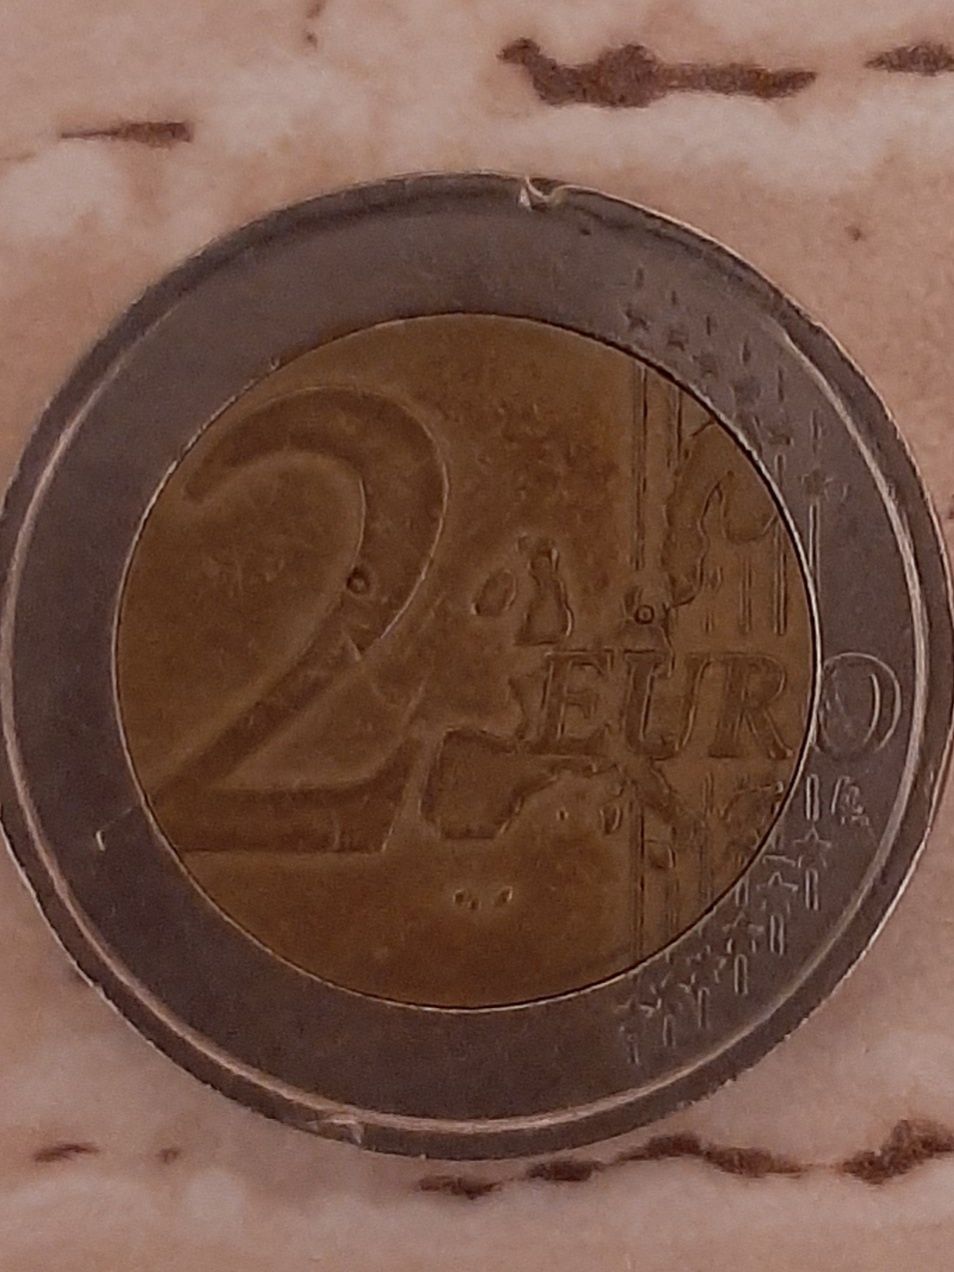 Monede rare de 2 euro din 2001 și 2002